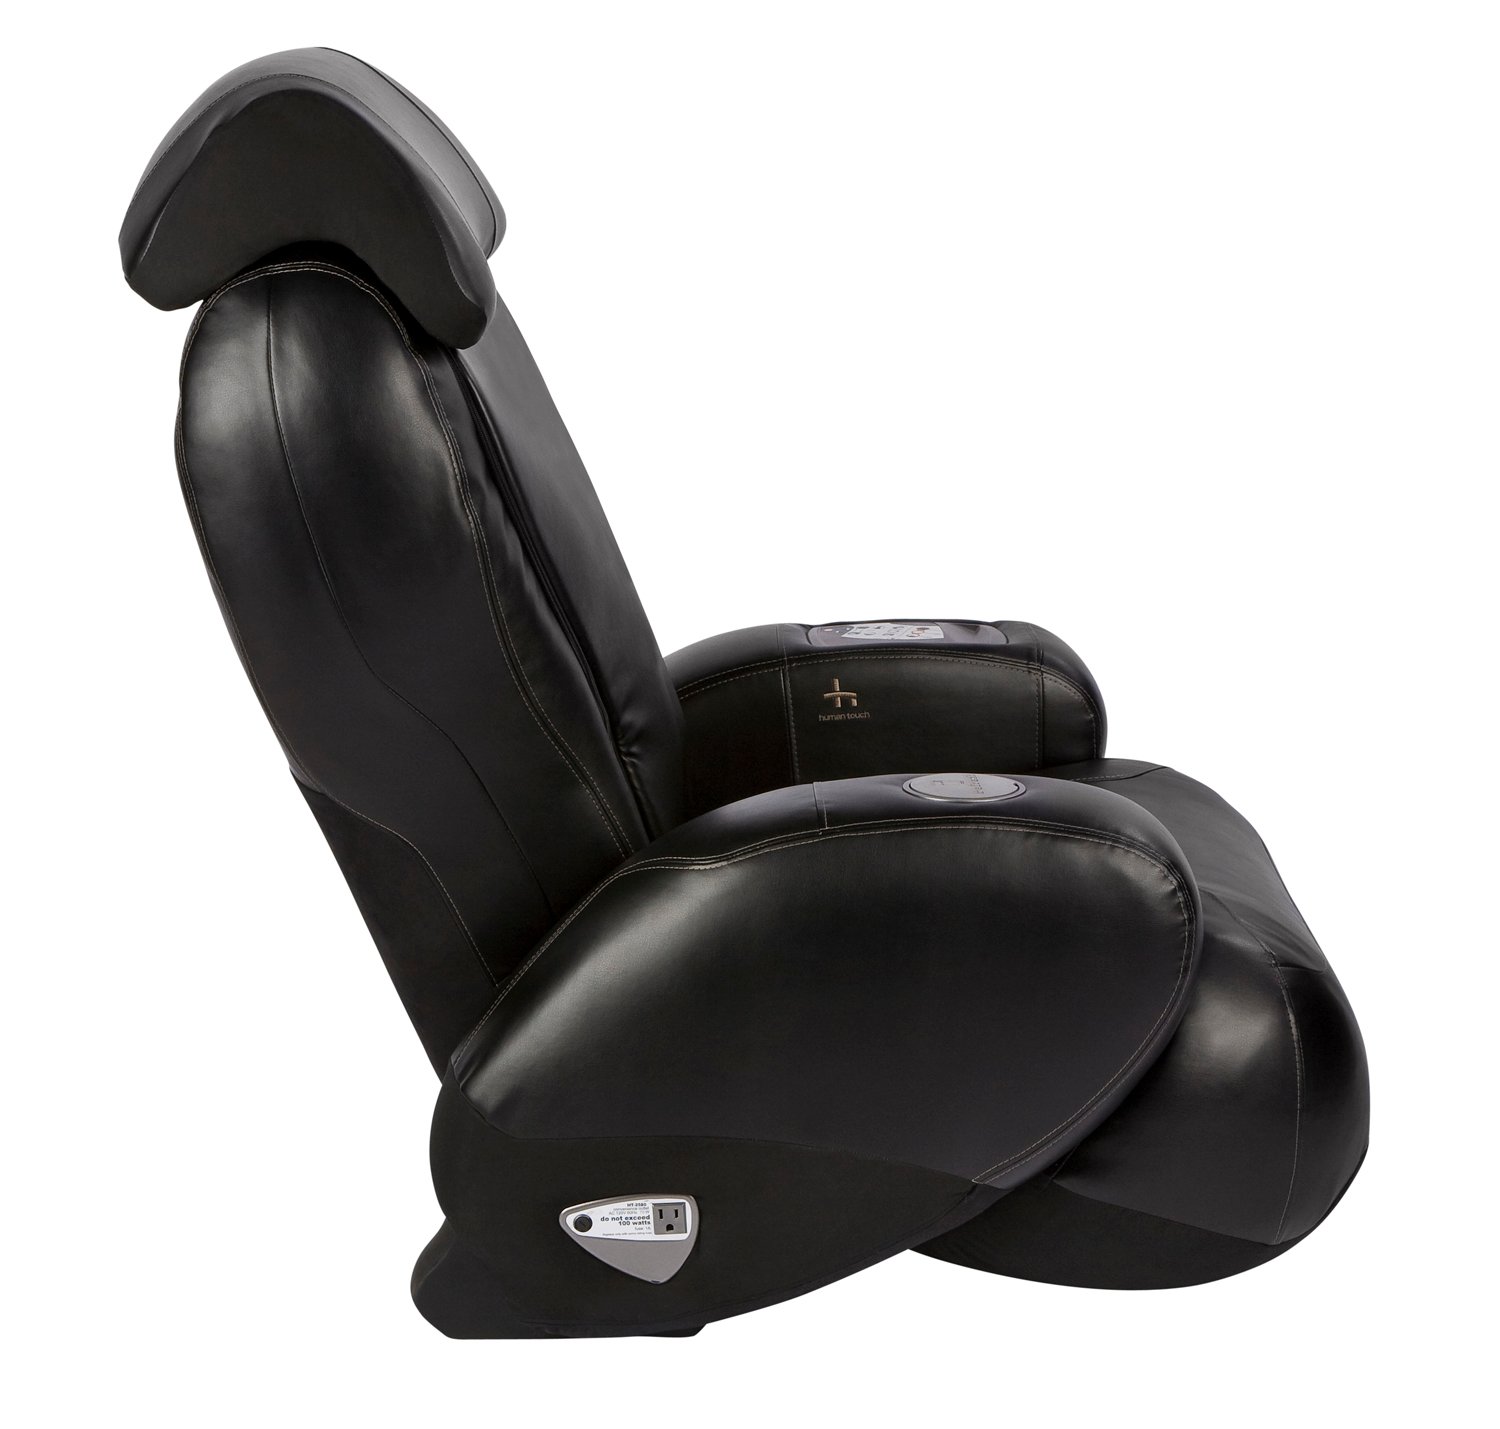 iJoy-2580 Robotic Massage Chair